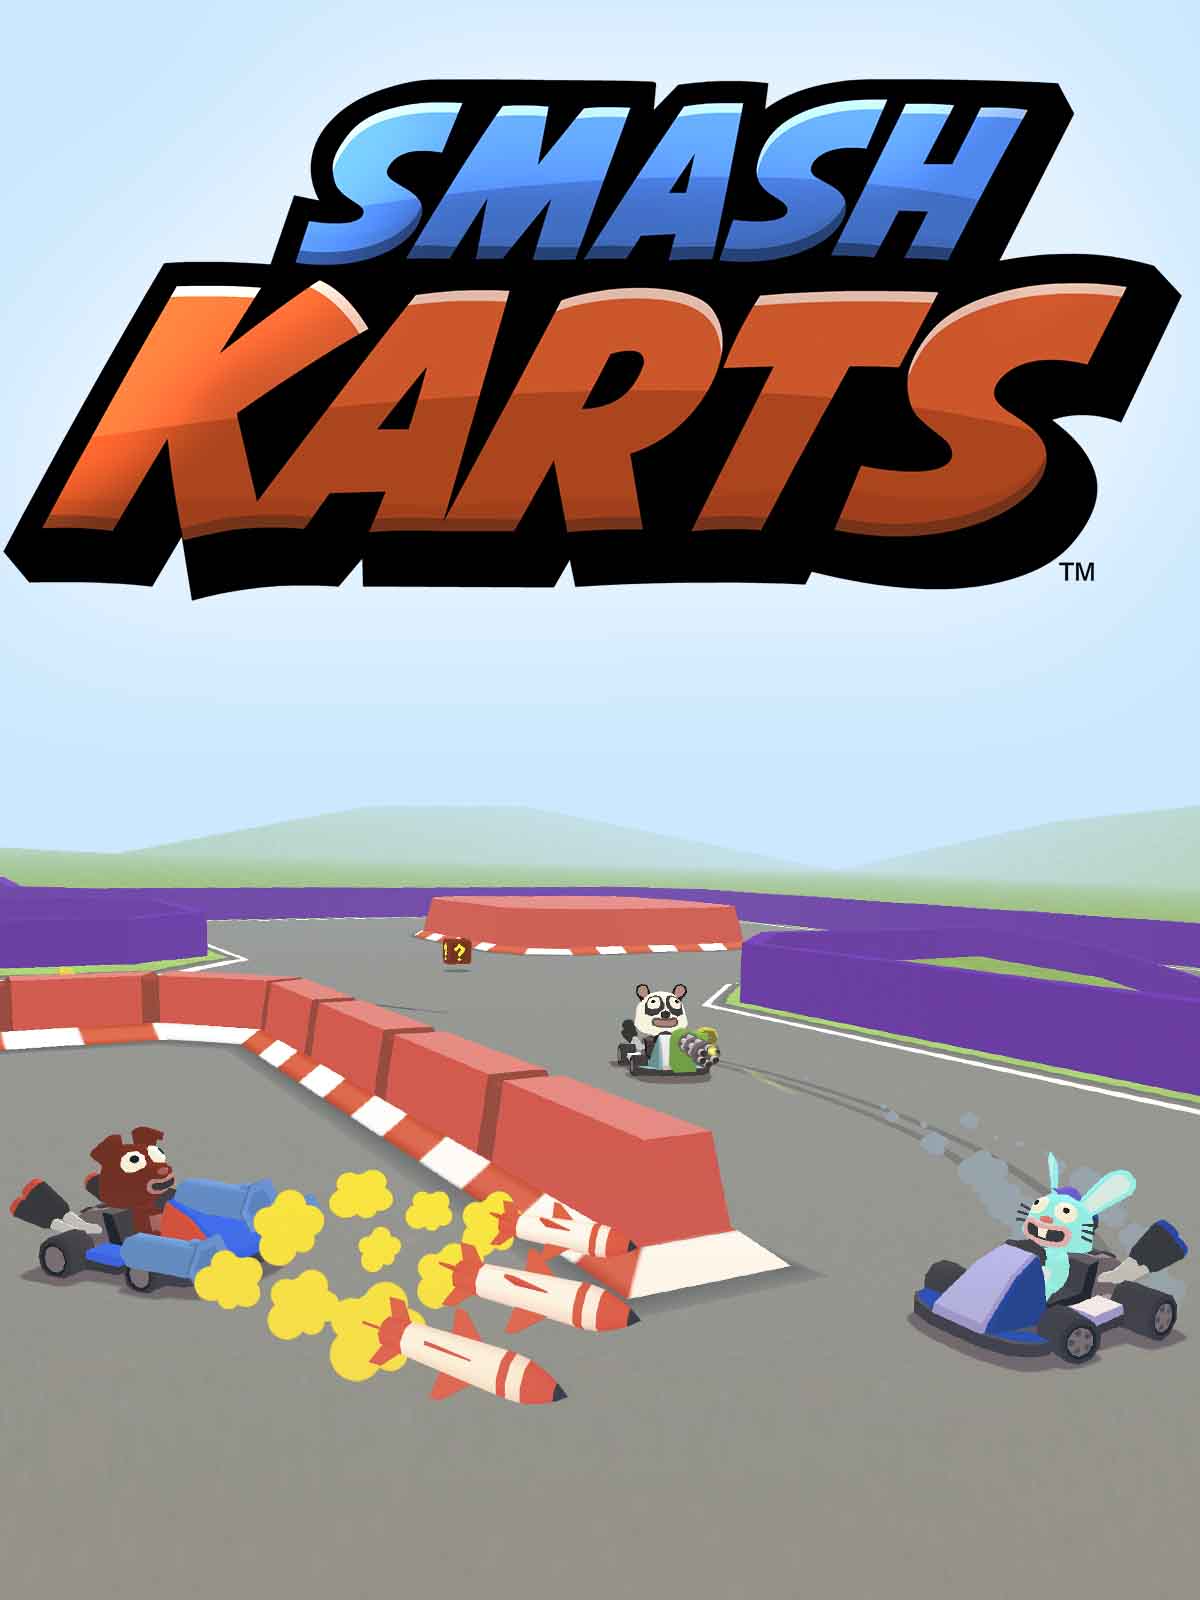 free smash karts account with 370k+ items 